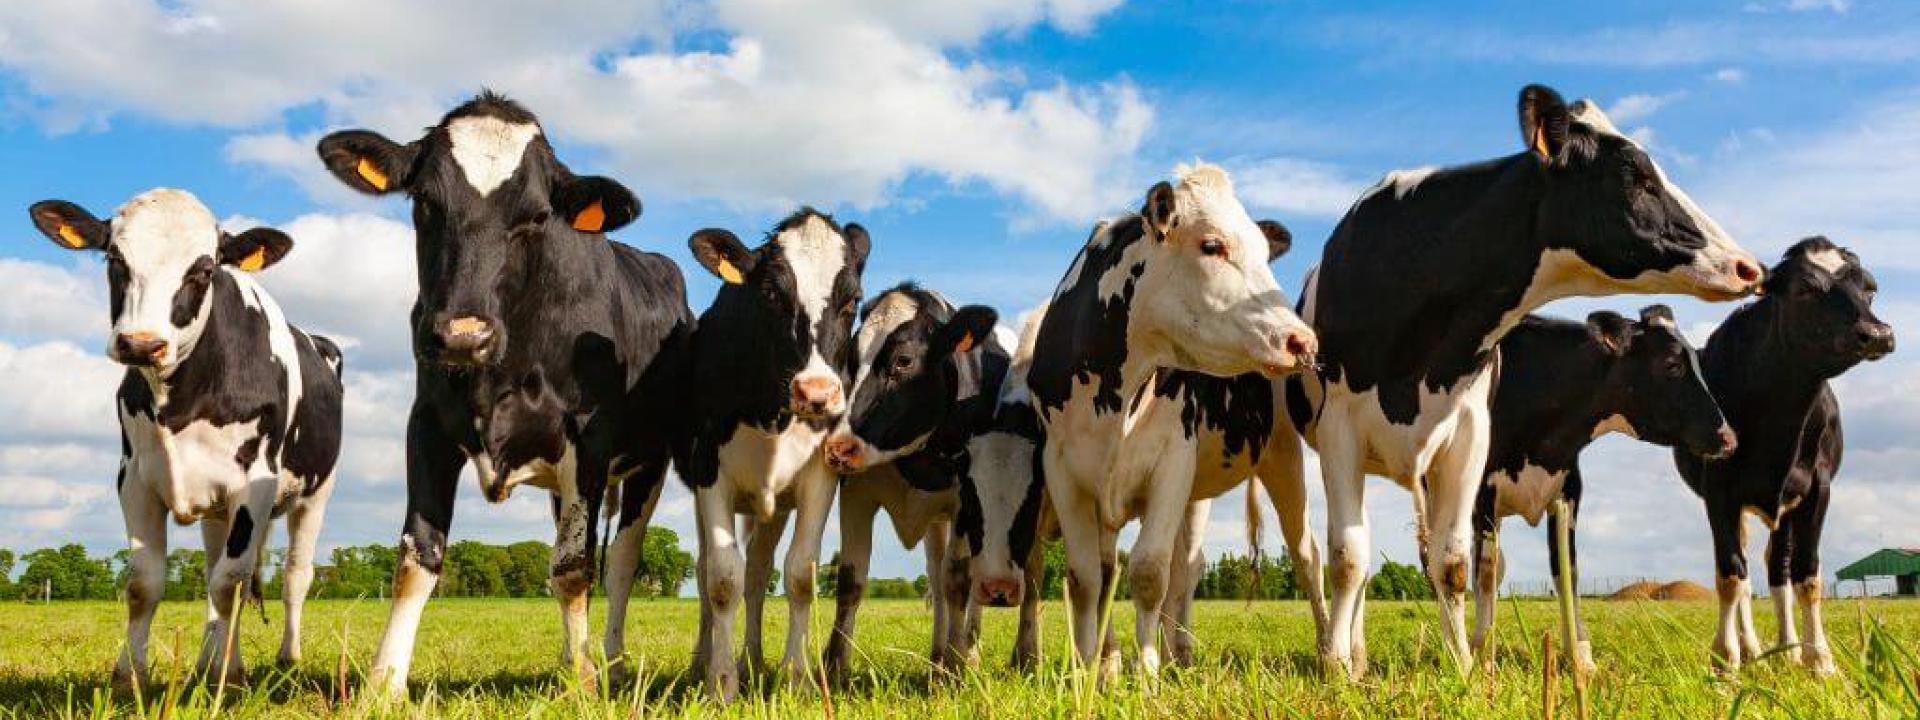 Holstein cows on dairy farm pasture.